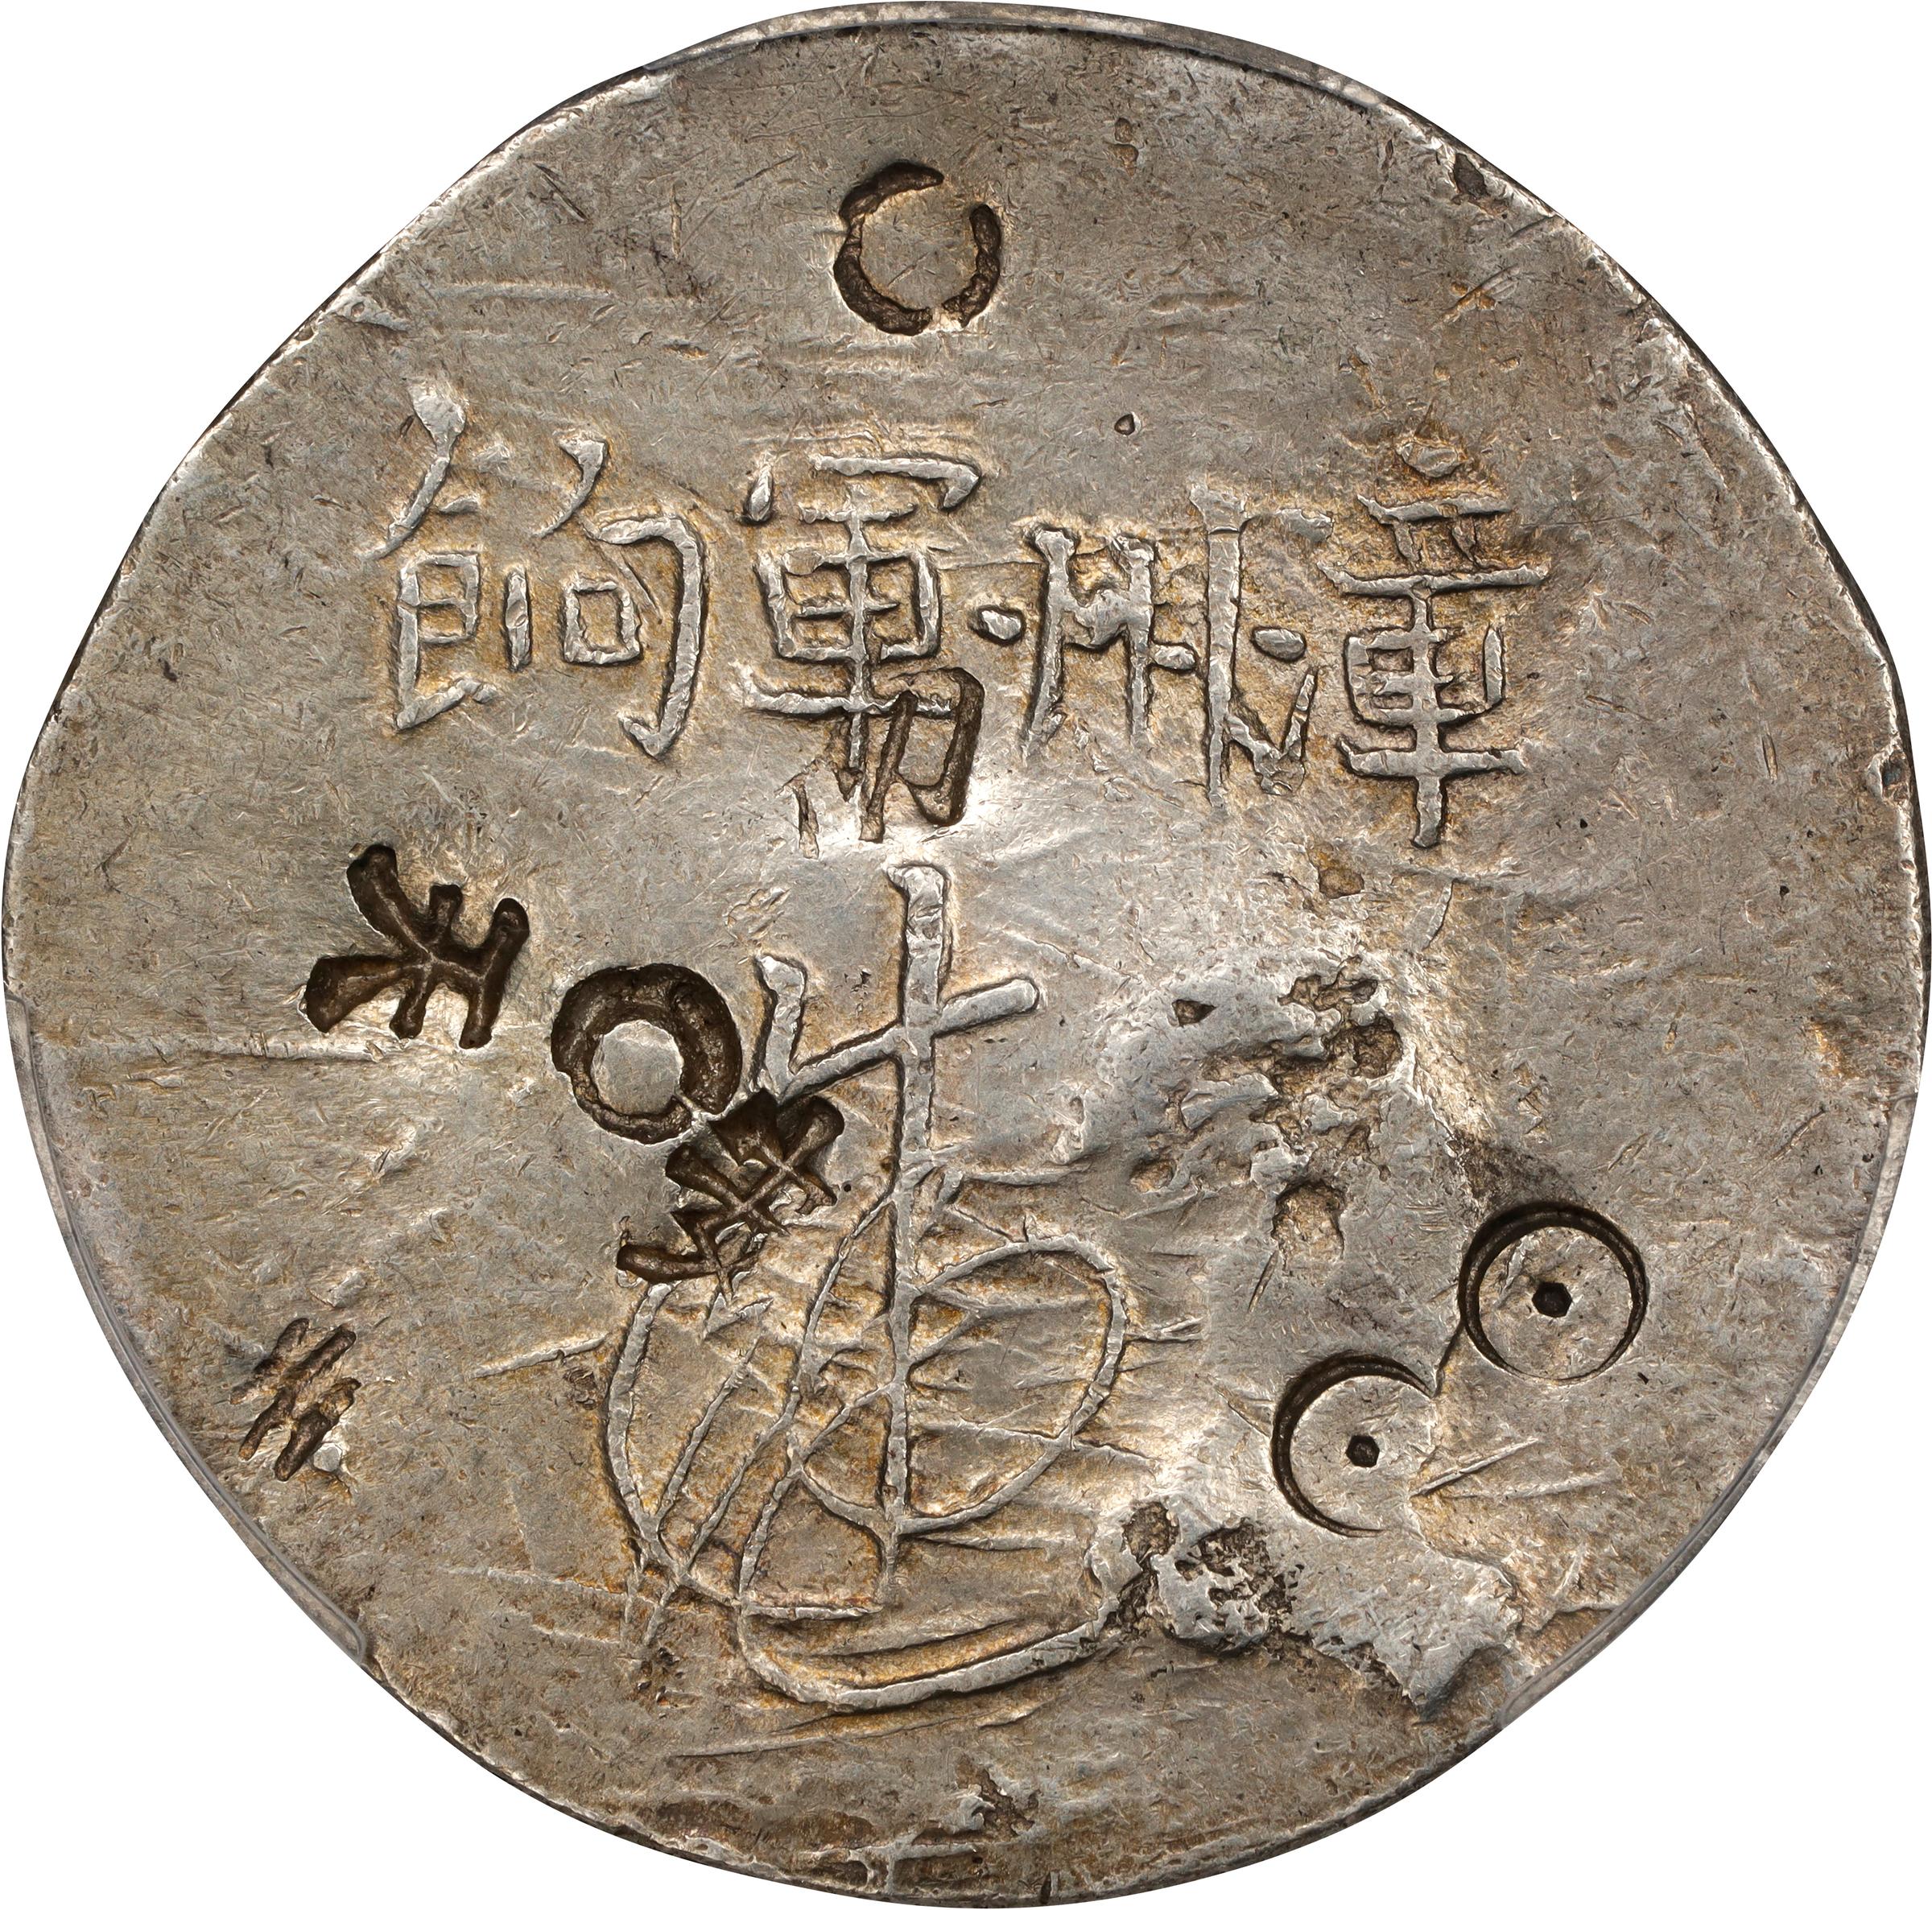 CHINA. Fukien. Dollar, ND (1844). Tao-kuang (Daoguang). PCGS 